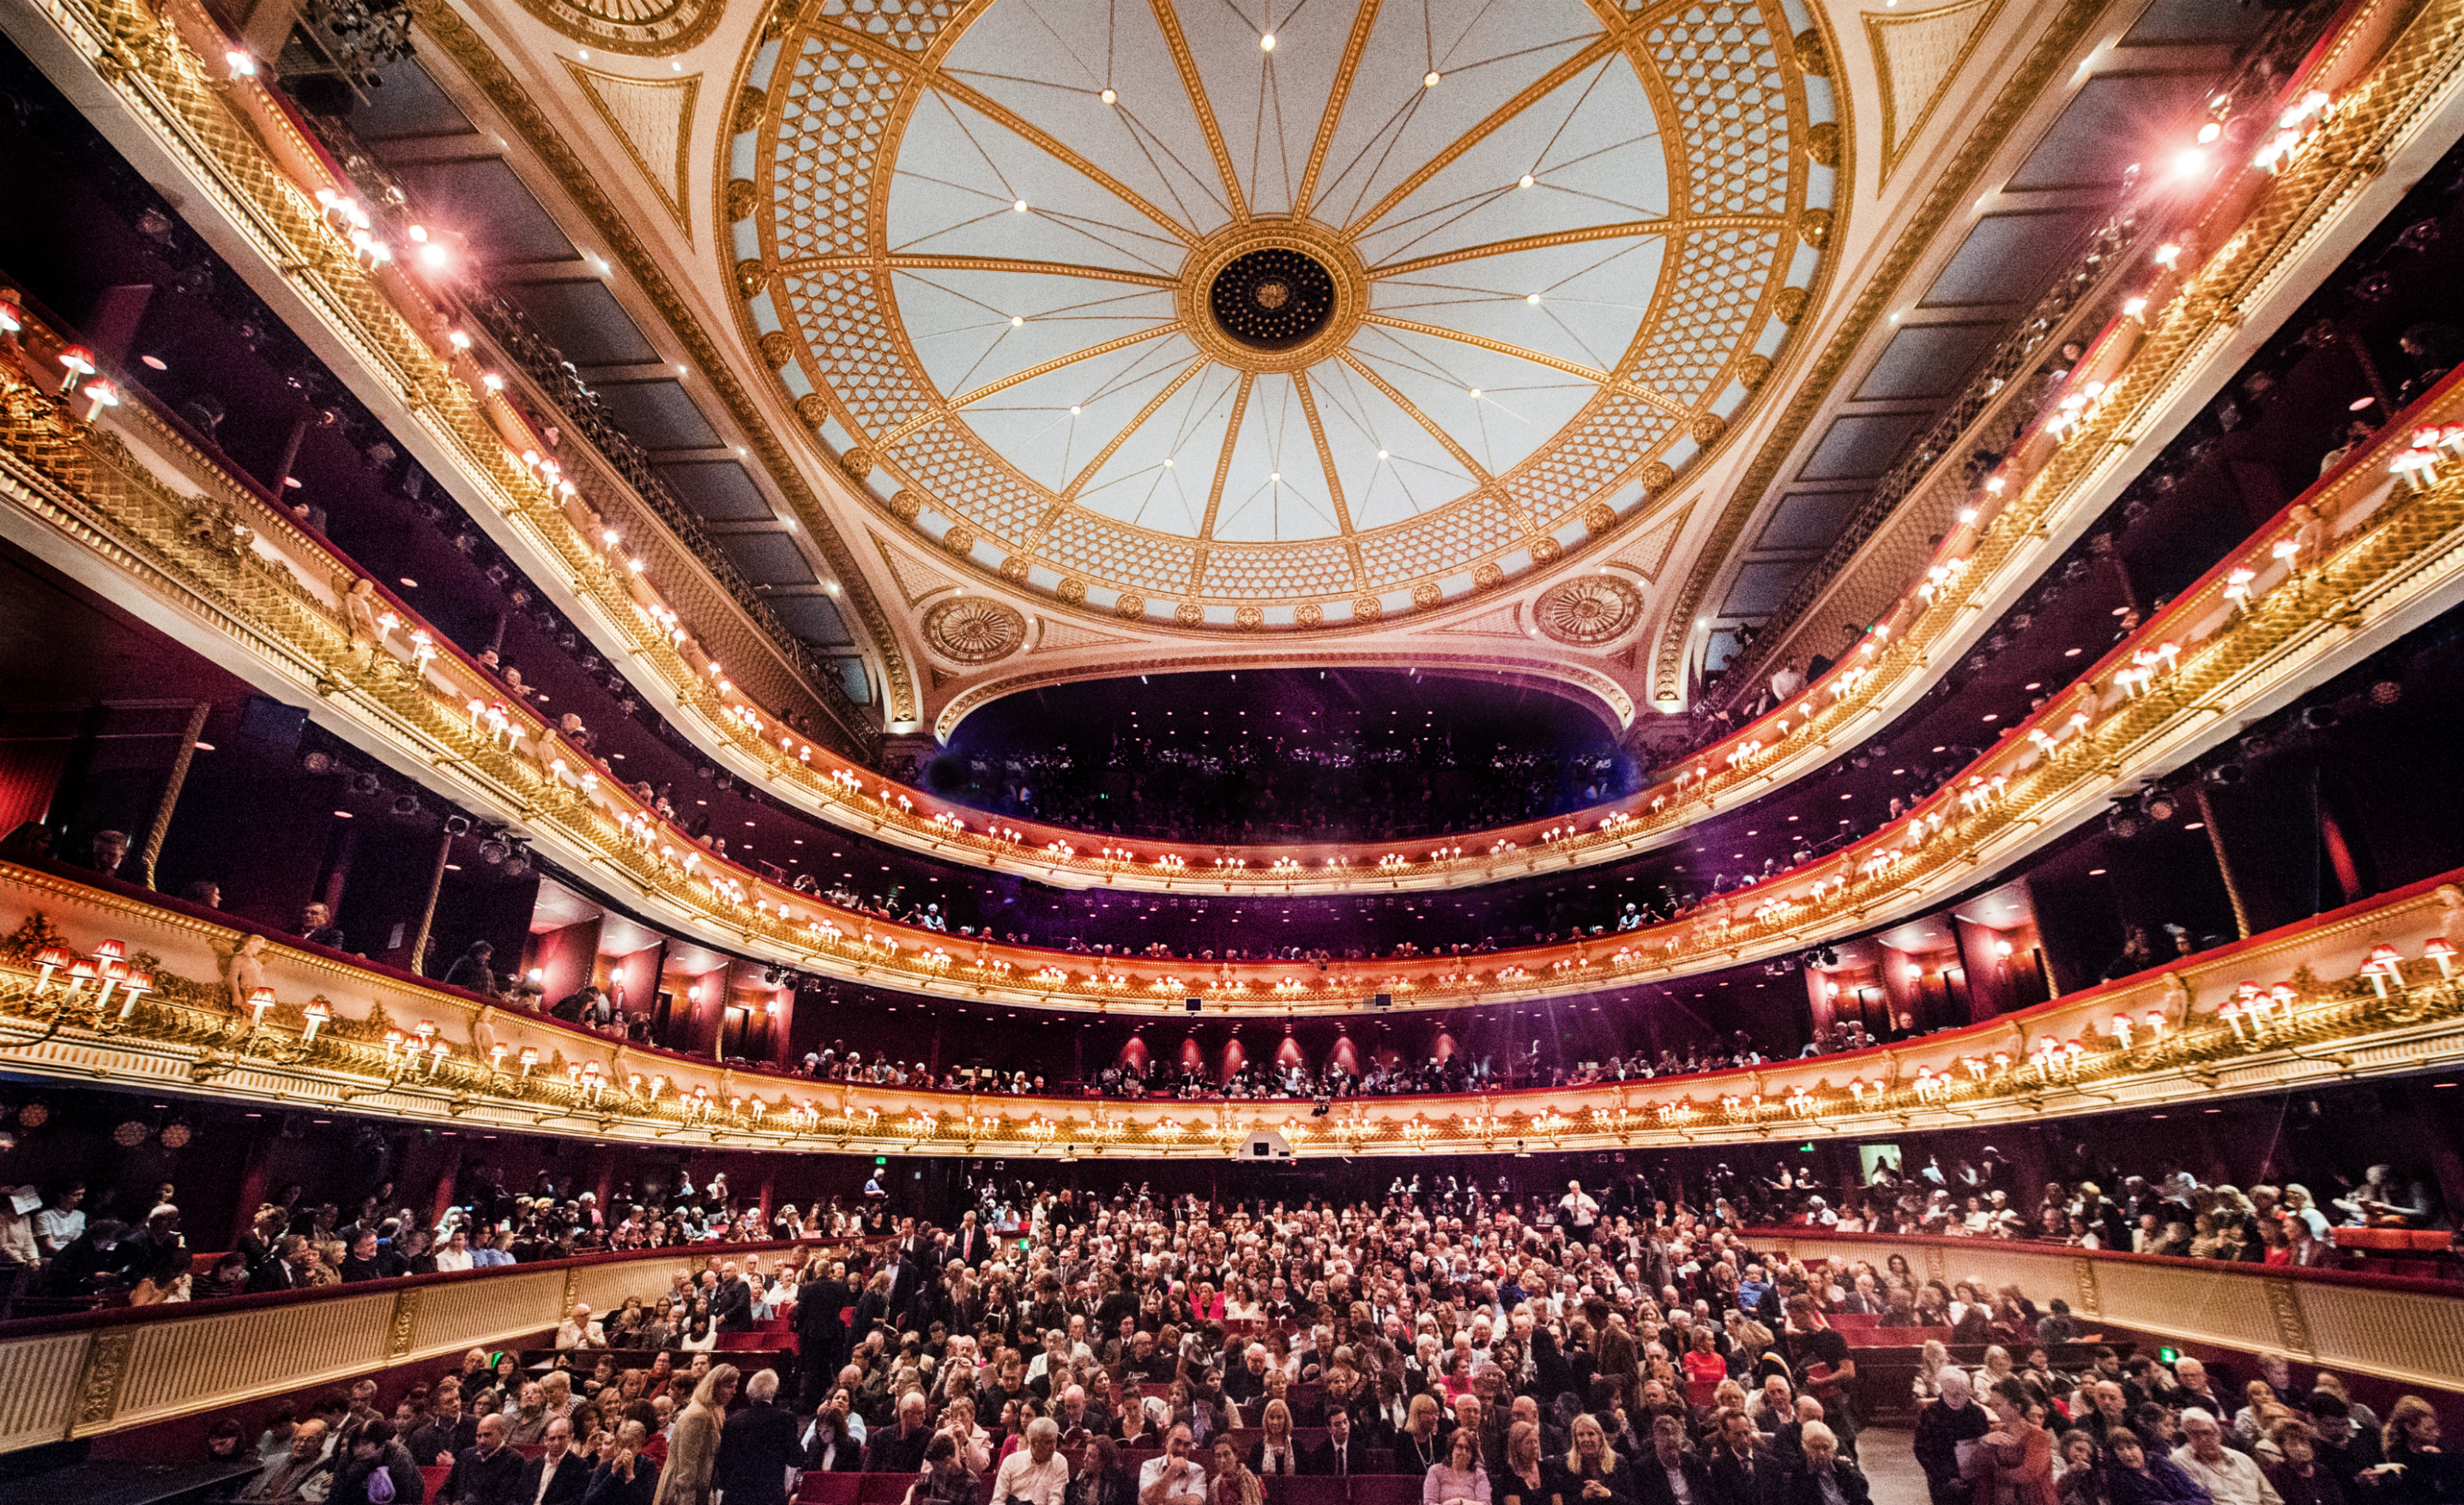 Театр вмещал зрителей. Королевский оперный театр Ковент-Гарден. Лондон опера Ковент Гарден. Королевский театр Ковент-Гарден, Лондон, Великобритания. Театр Ковент-Гарден сцена.